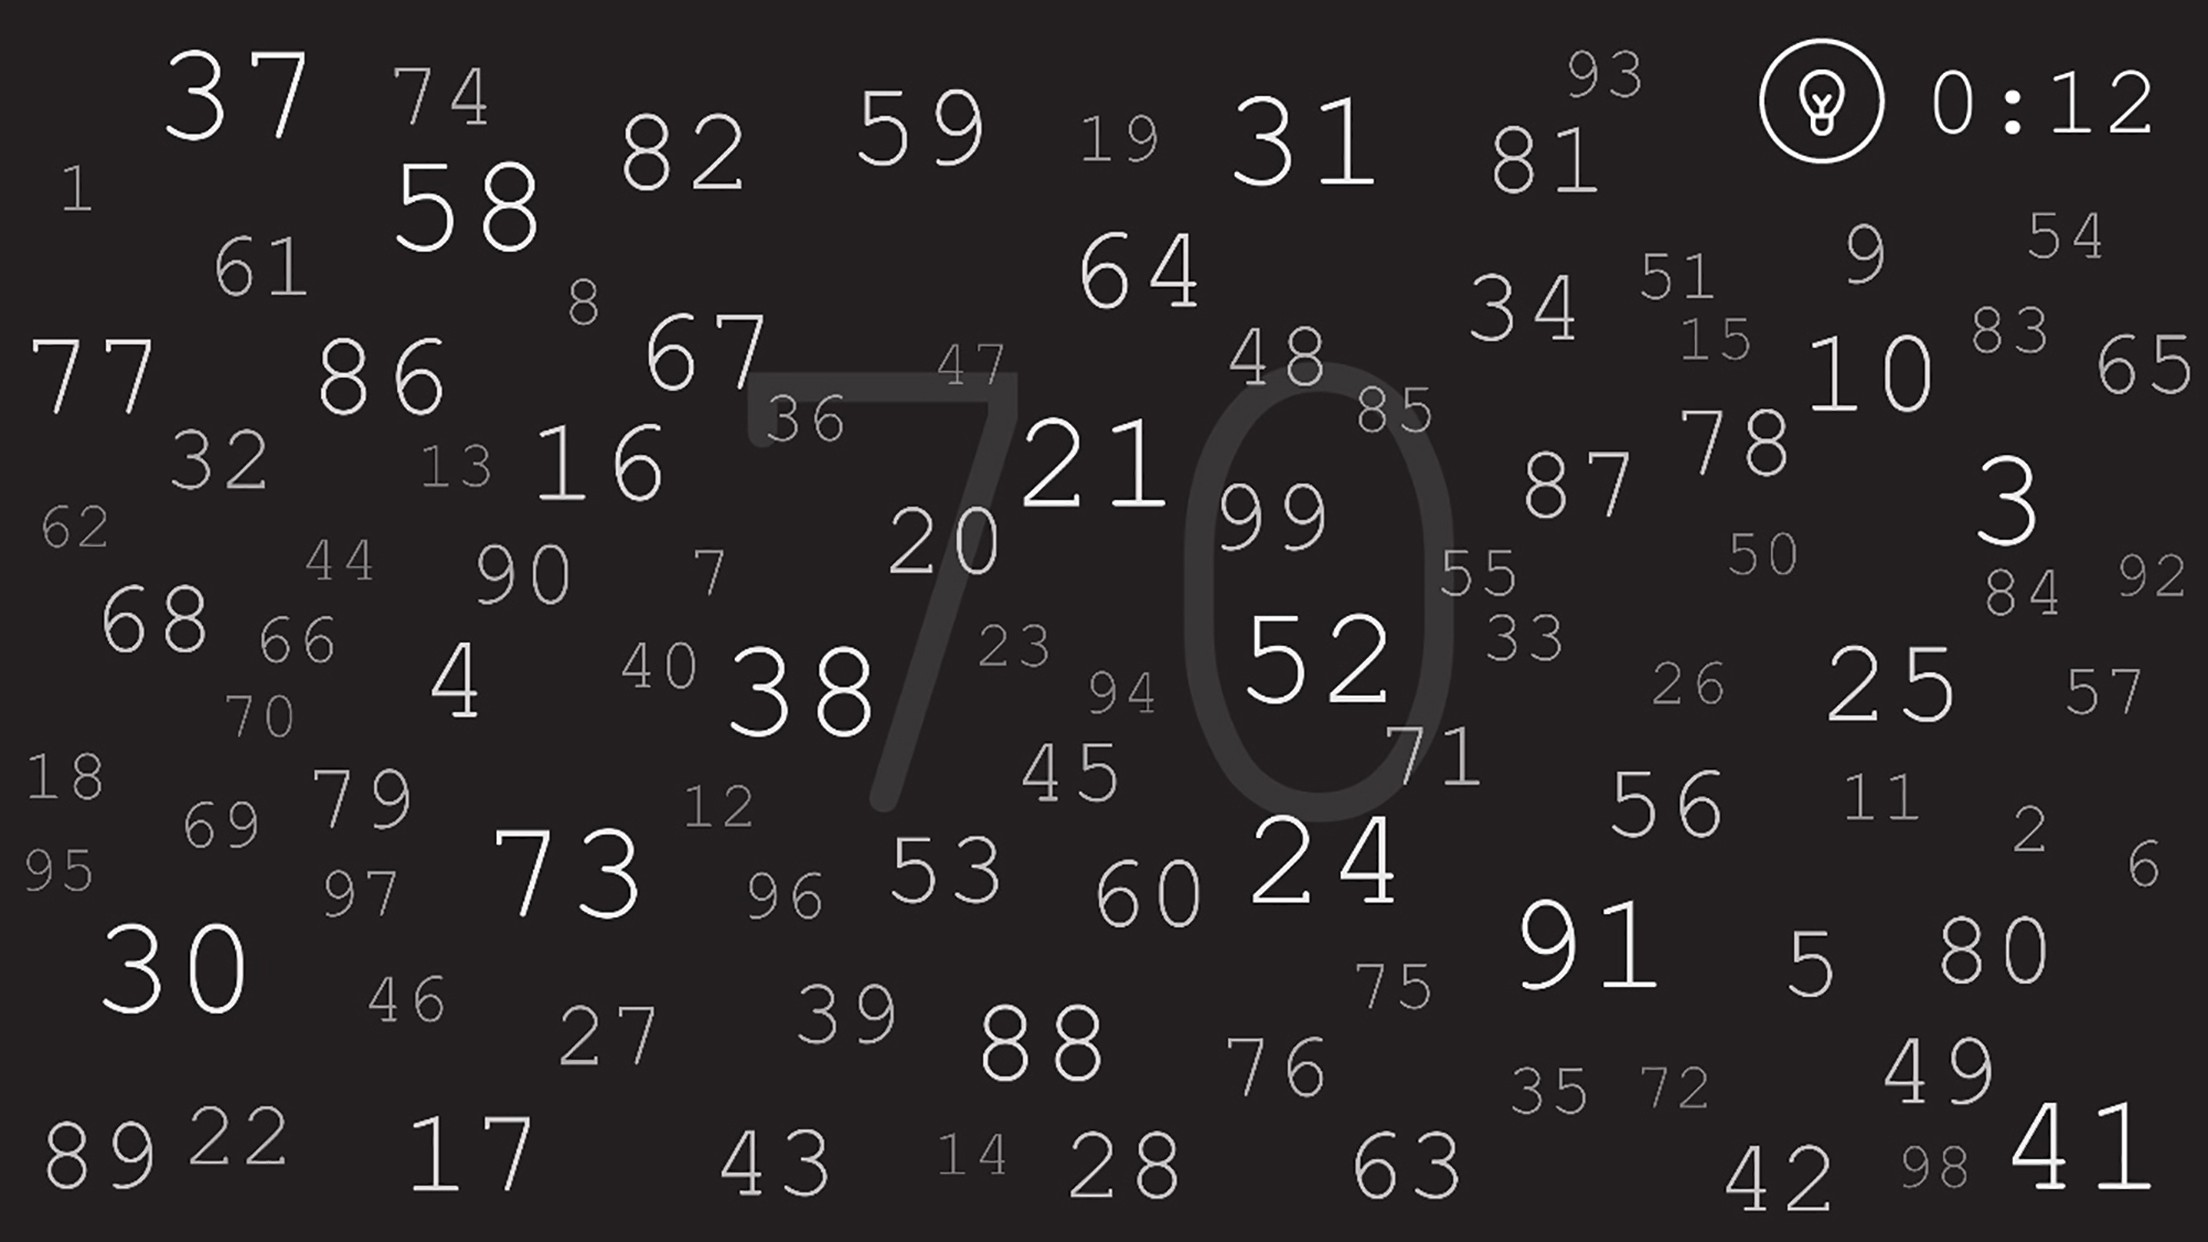 Random99 - Find The Number